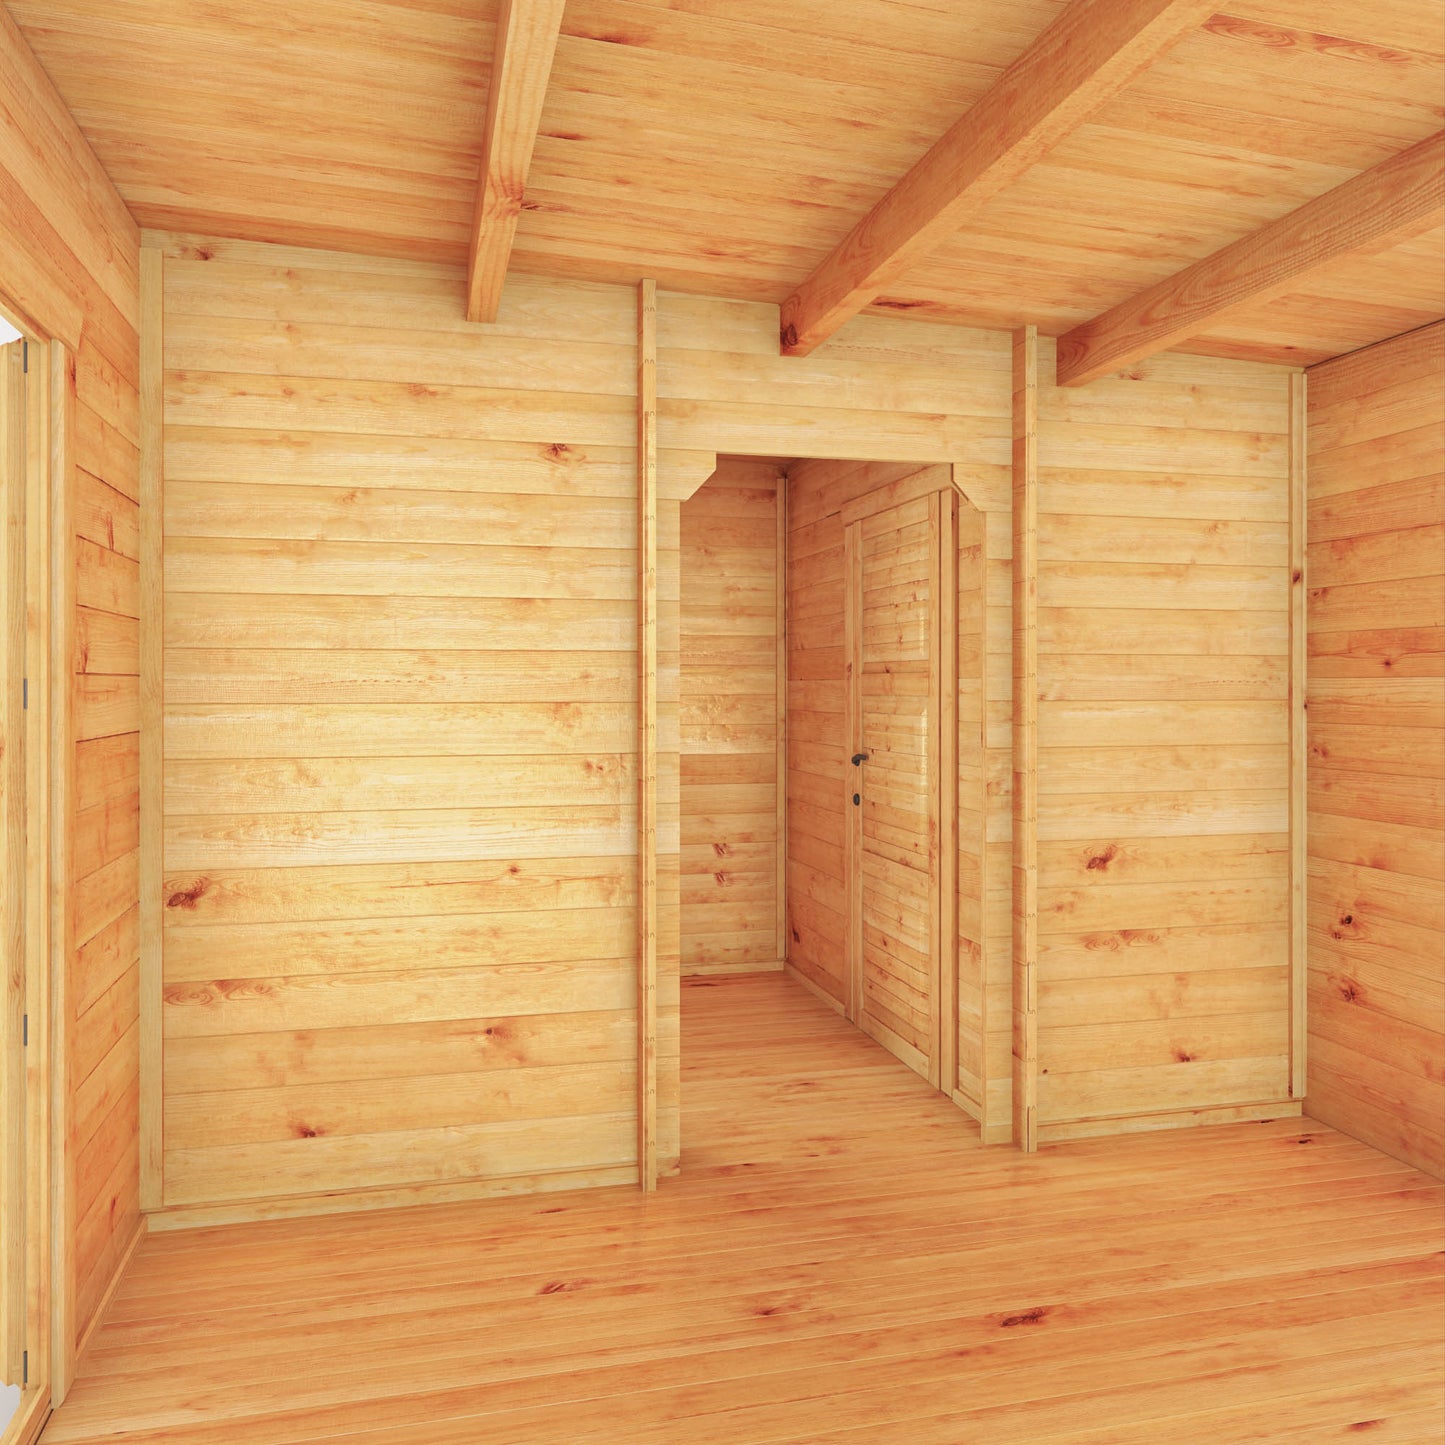 6 x 4m Goldfinch Premium Log Cabin